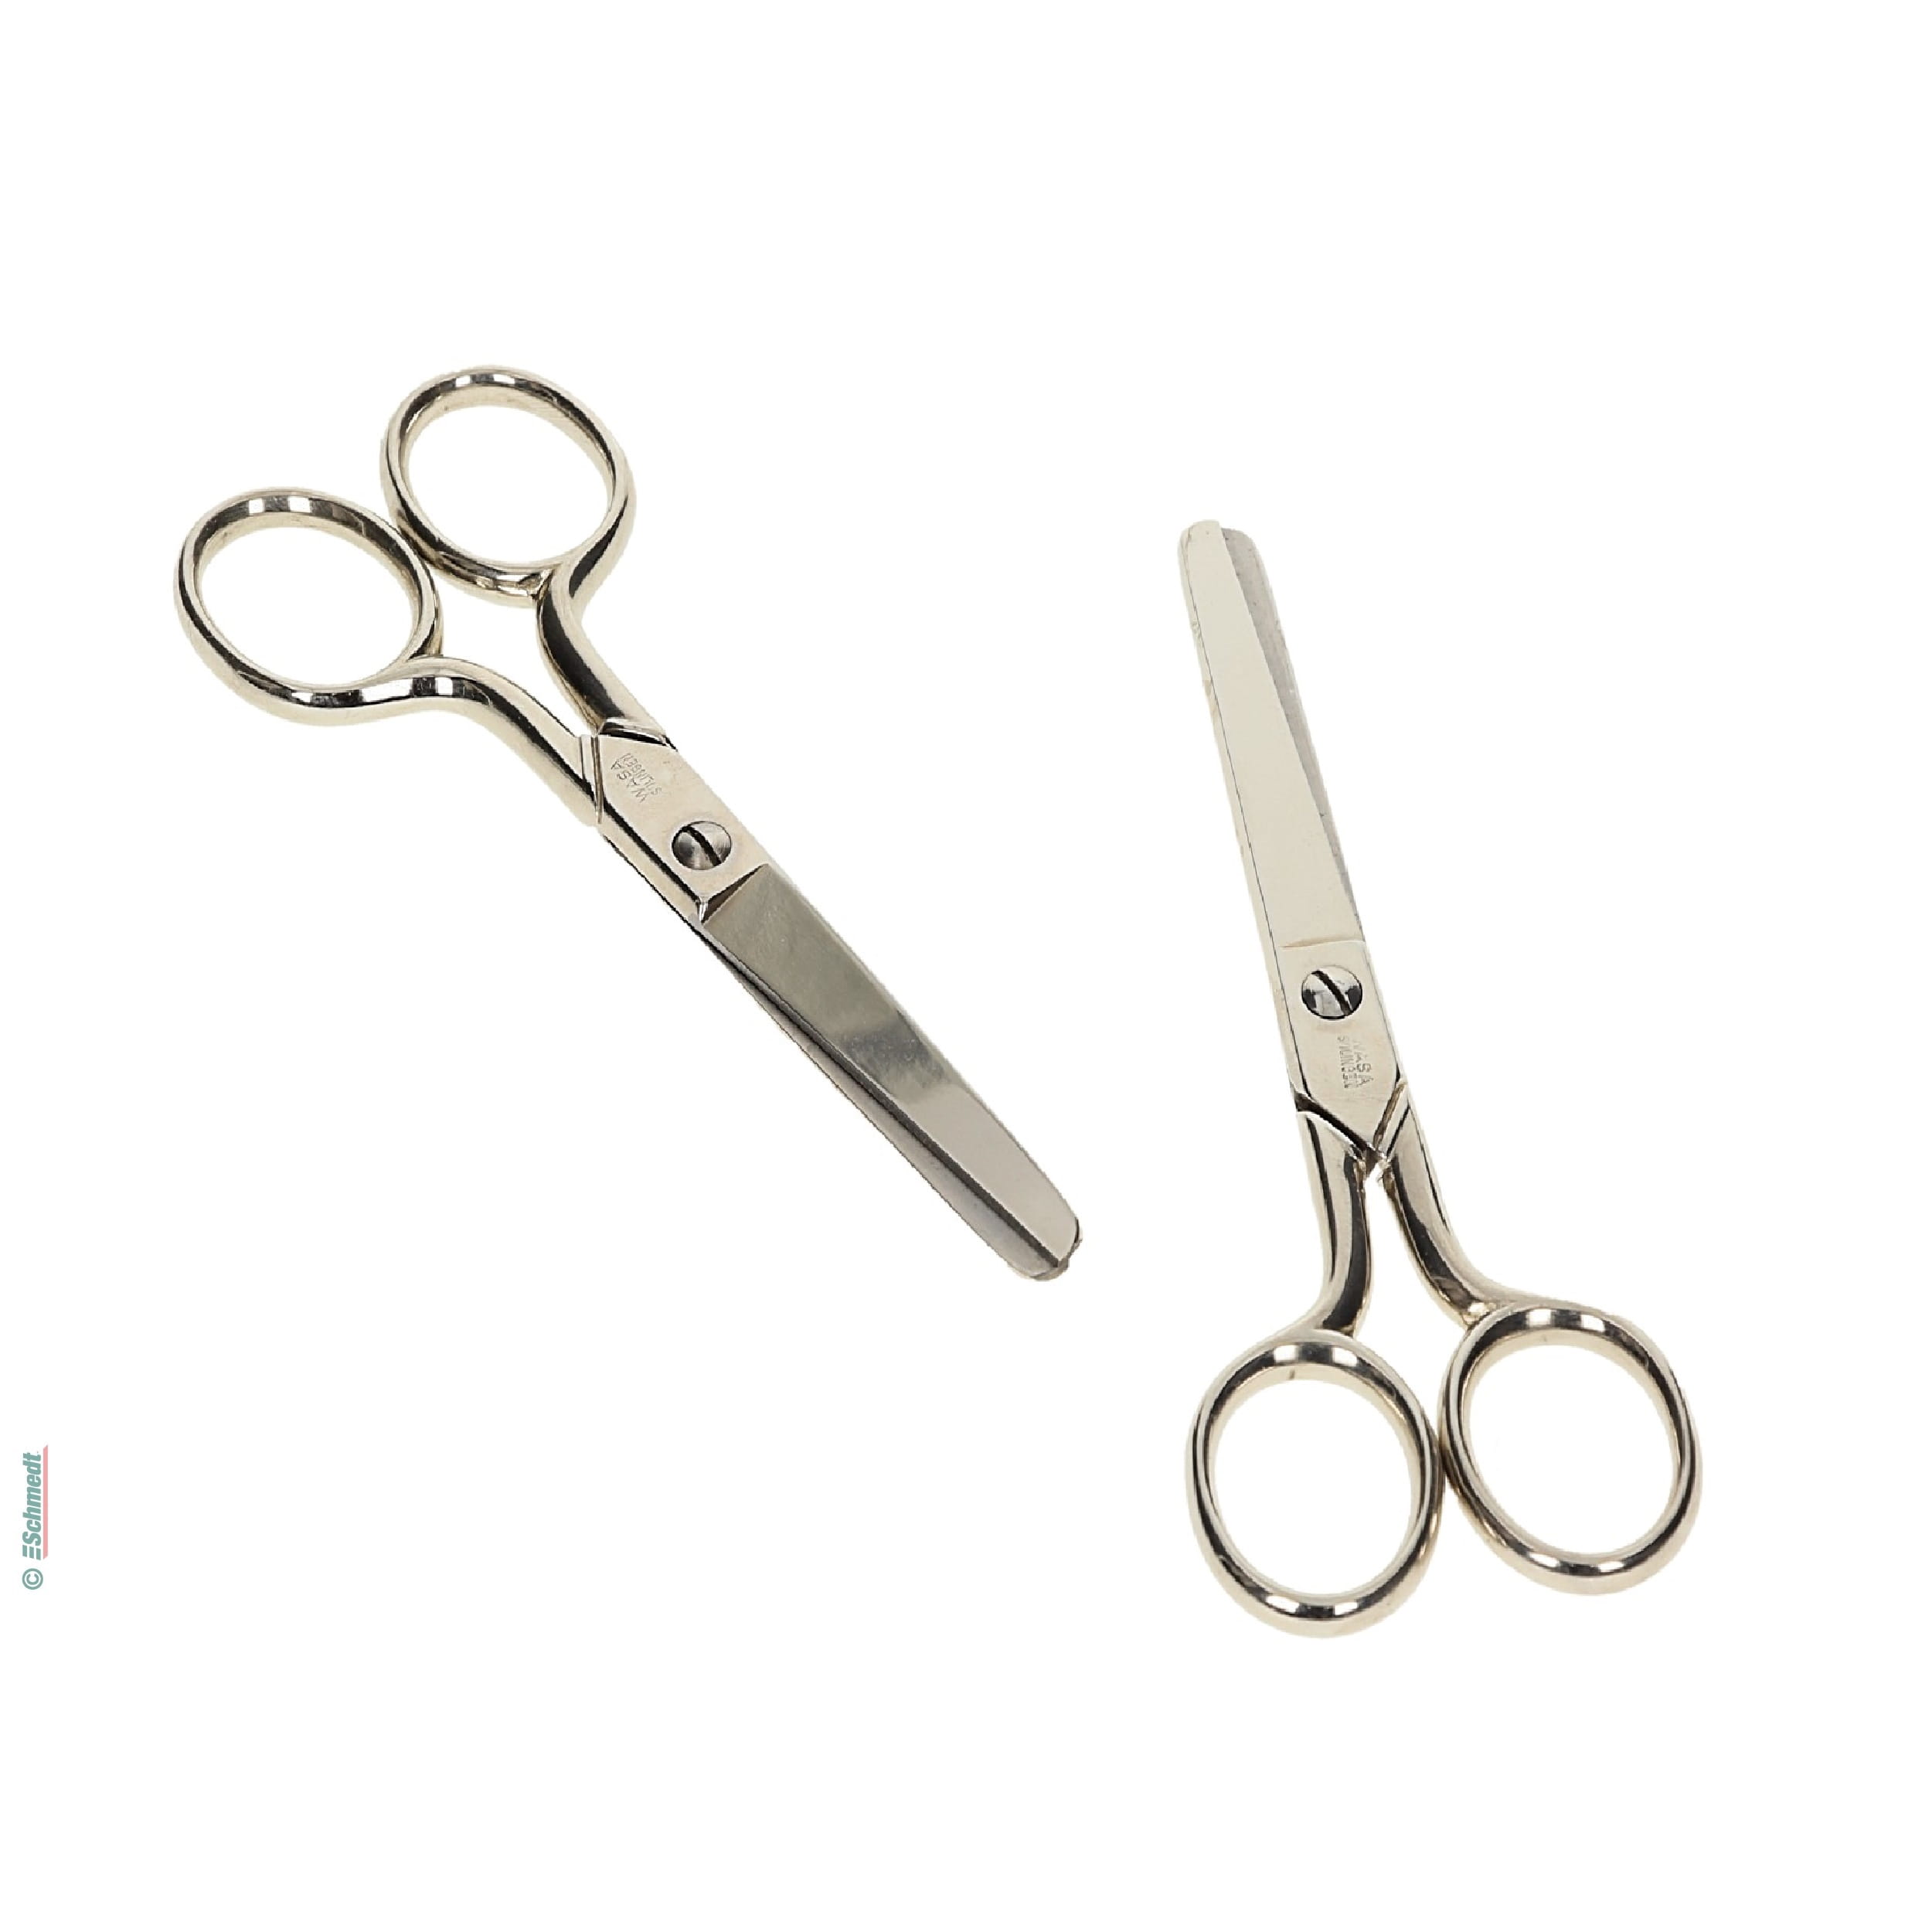 Multipurpose Pocket Scissors Small Stainless Steel Scissors With